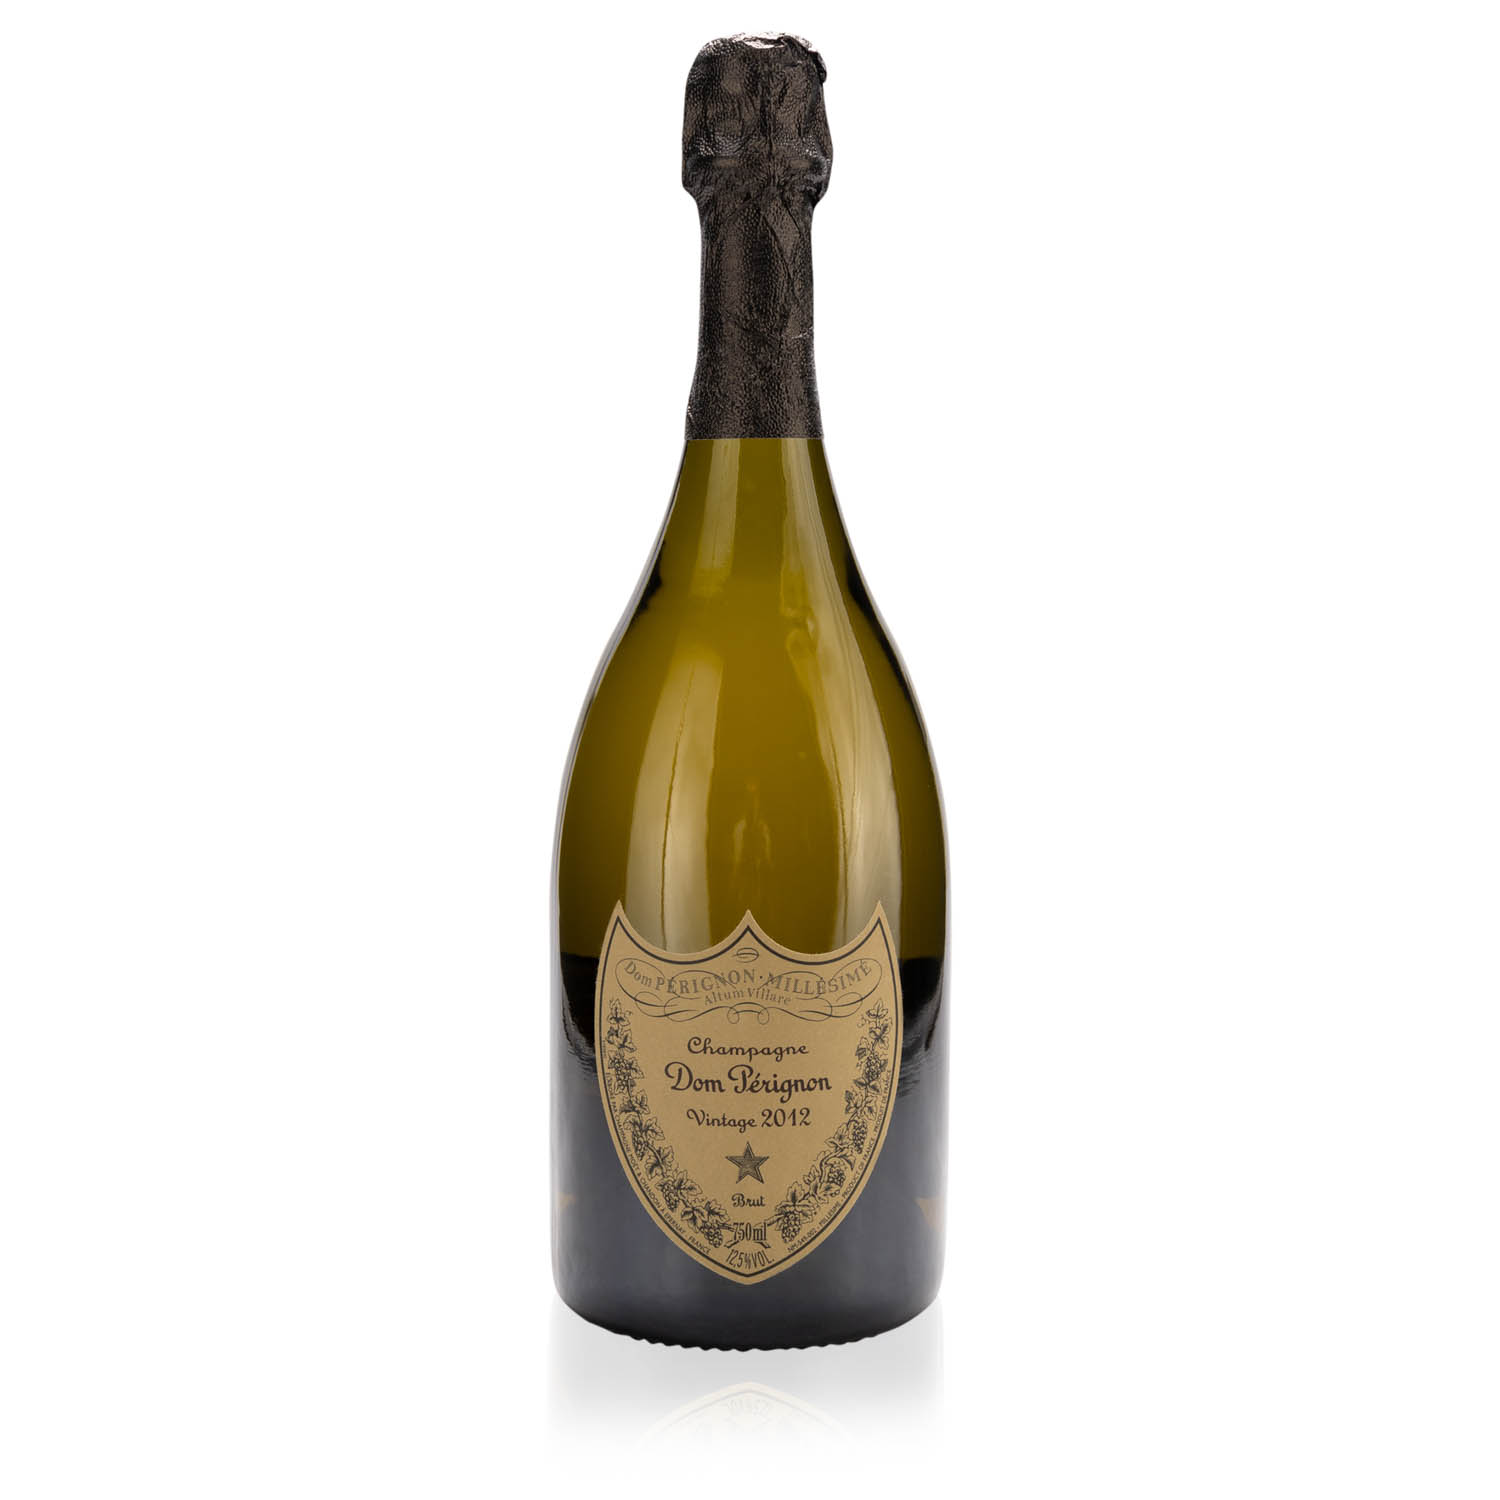 Dom Pergignon - Champagne Brut Vintage 2012